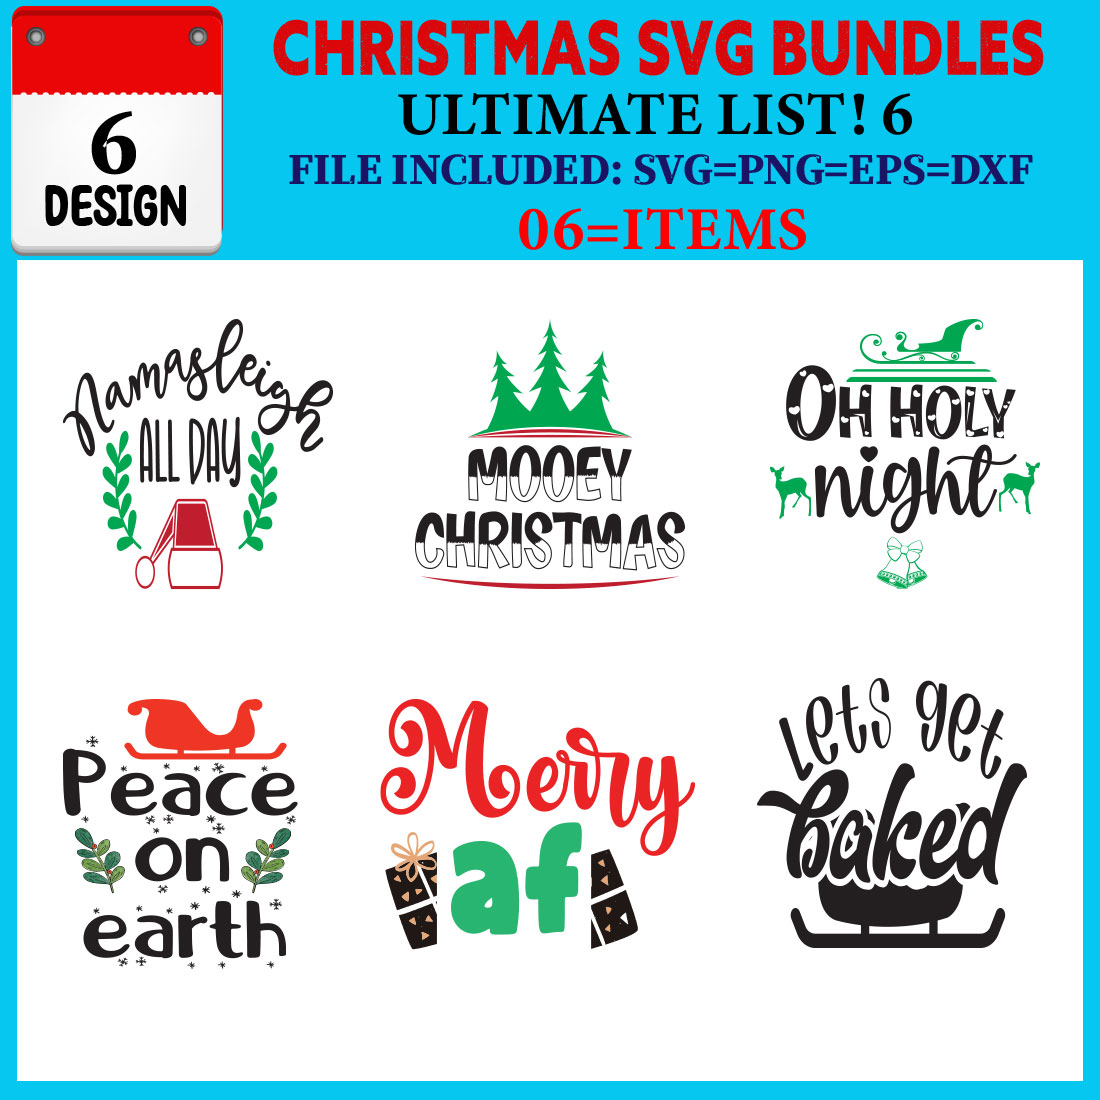 Christmas T-shirt Design Bundle Vol-38 cover image.